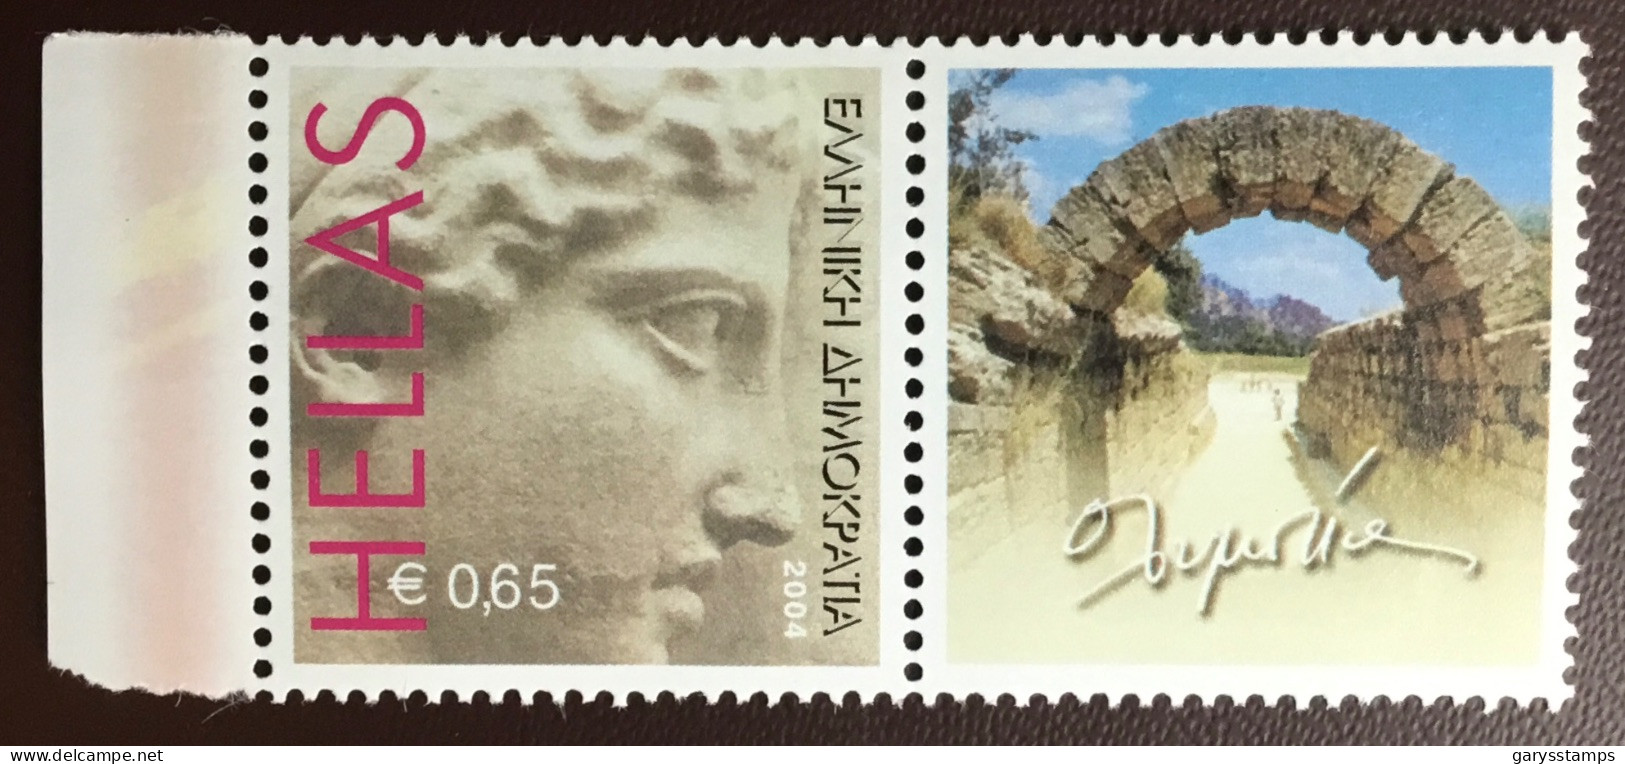 Greece 2003 Greetings Stamp MNH - Neufs